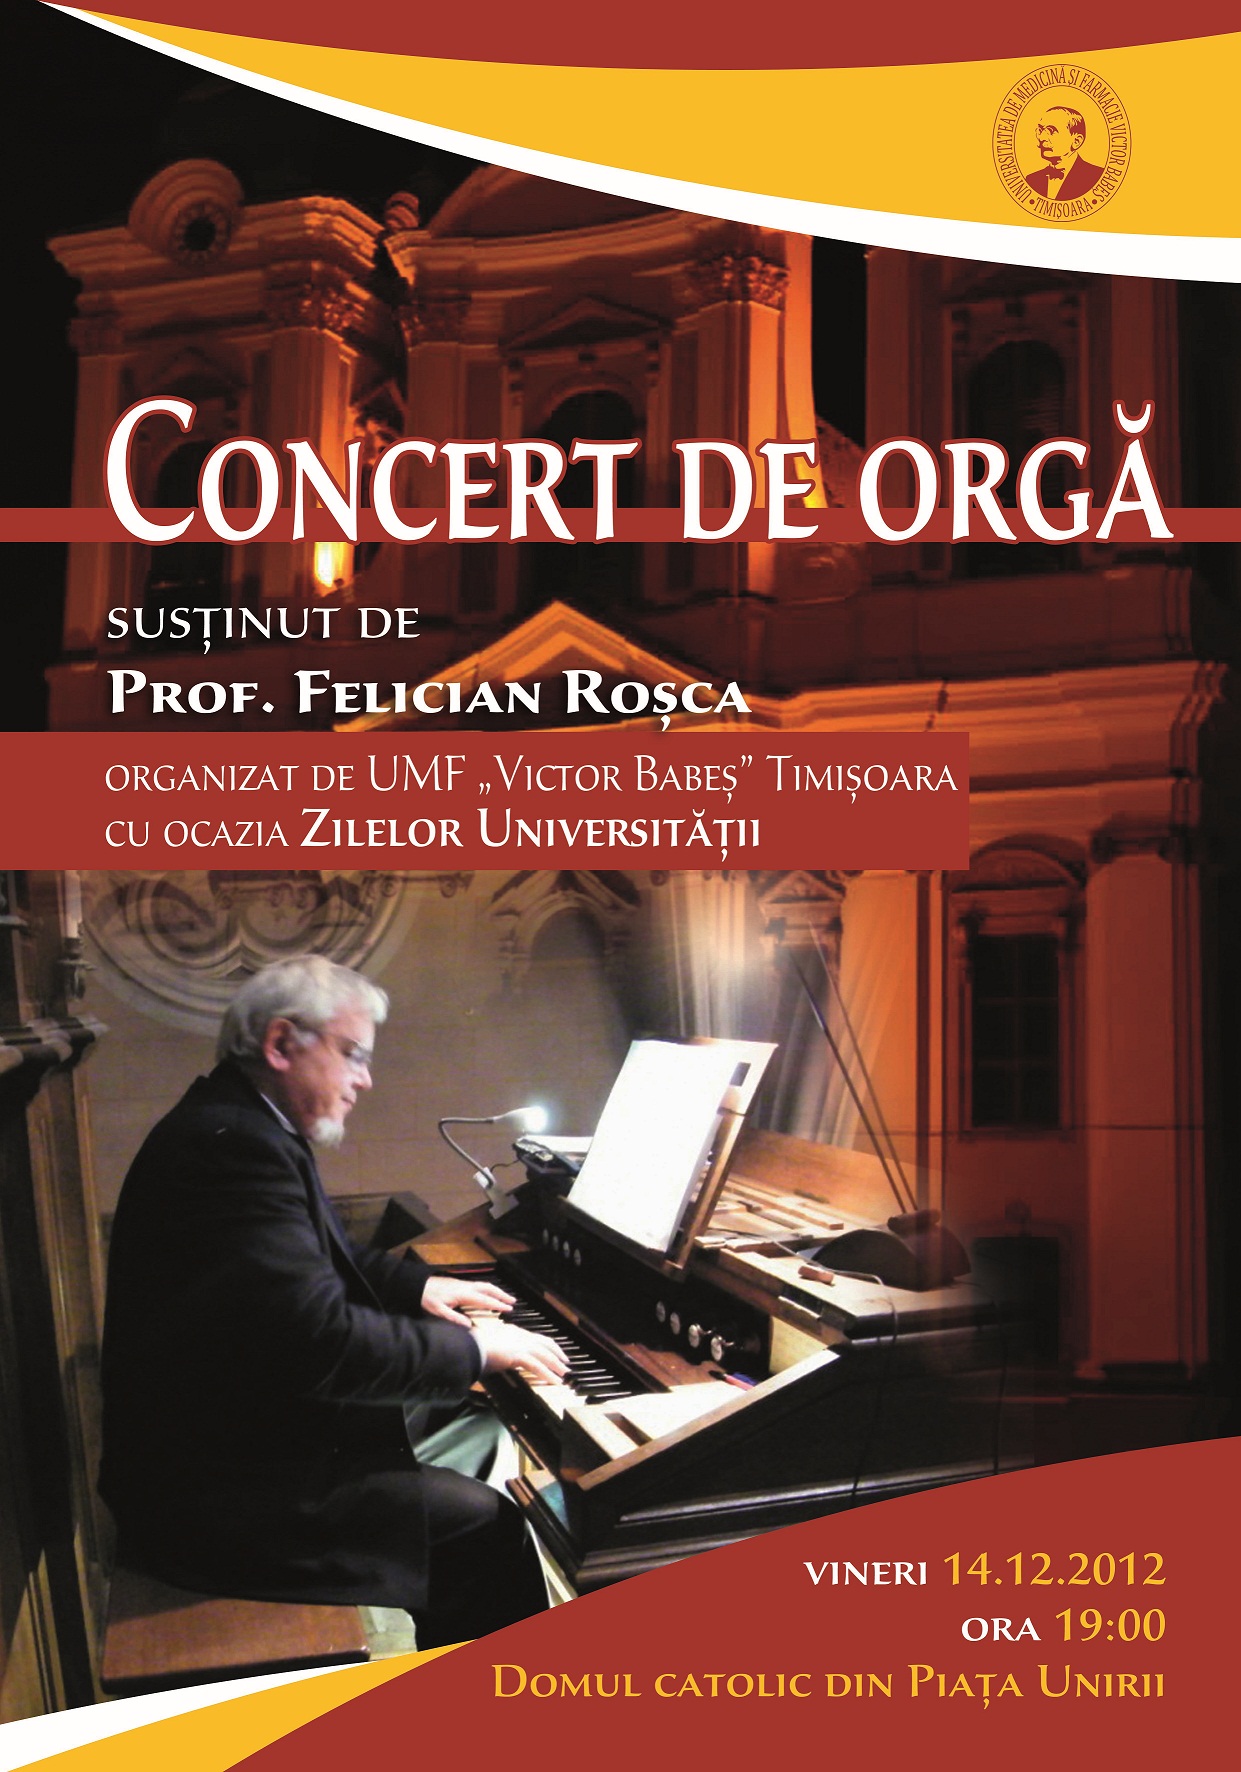 Concert de orga - 14.12.2012